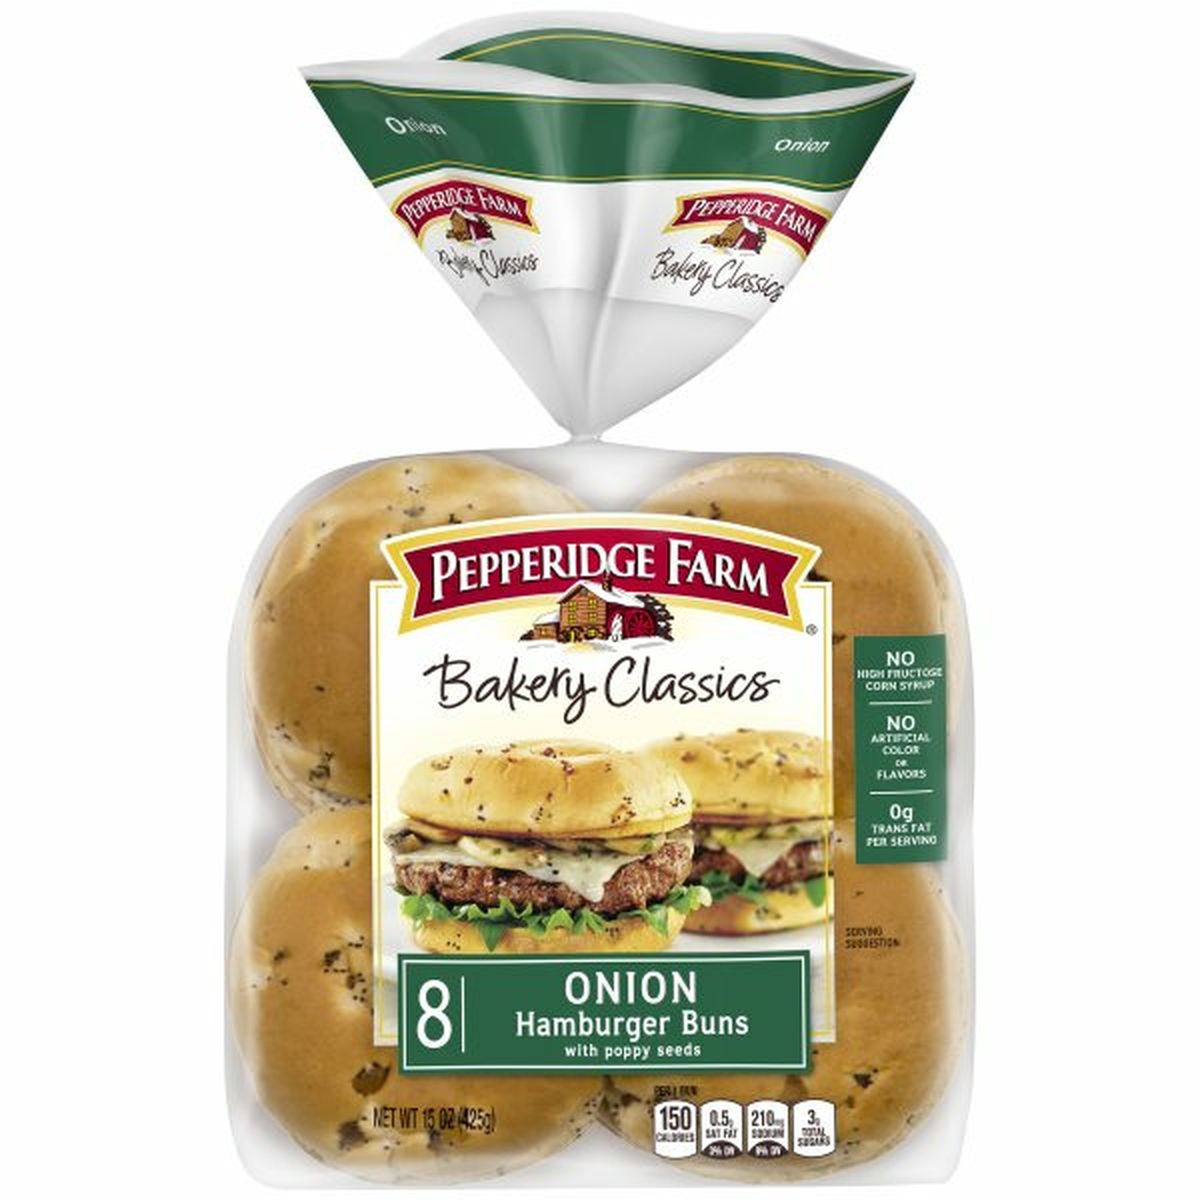 Calories in Pepperidge Farms  Bakery Classics Bakery Classics Onion with Poppy Seeds Hamburger Buns